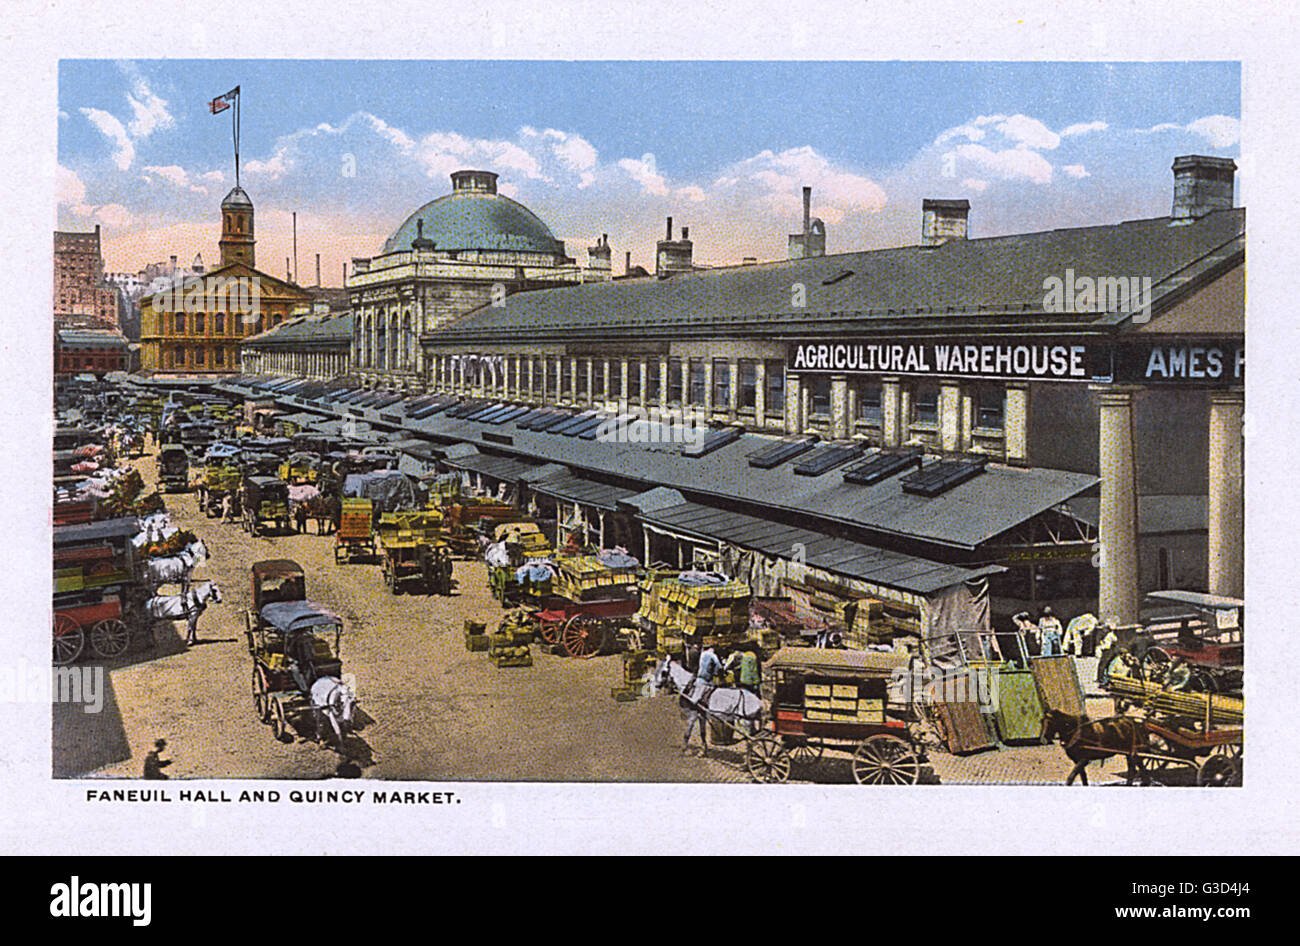 Faneuil Hall and Quincy Market, Boston, Massachusetts, USA Stock Photo